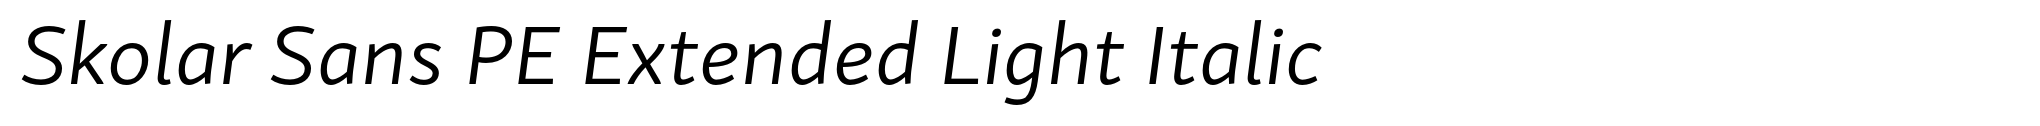 Skolar Sans PE Extended Light Italic image